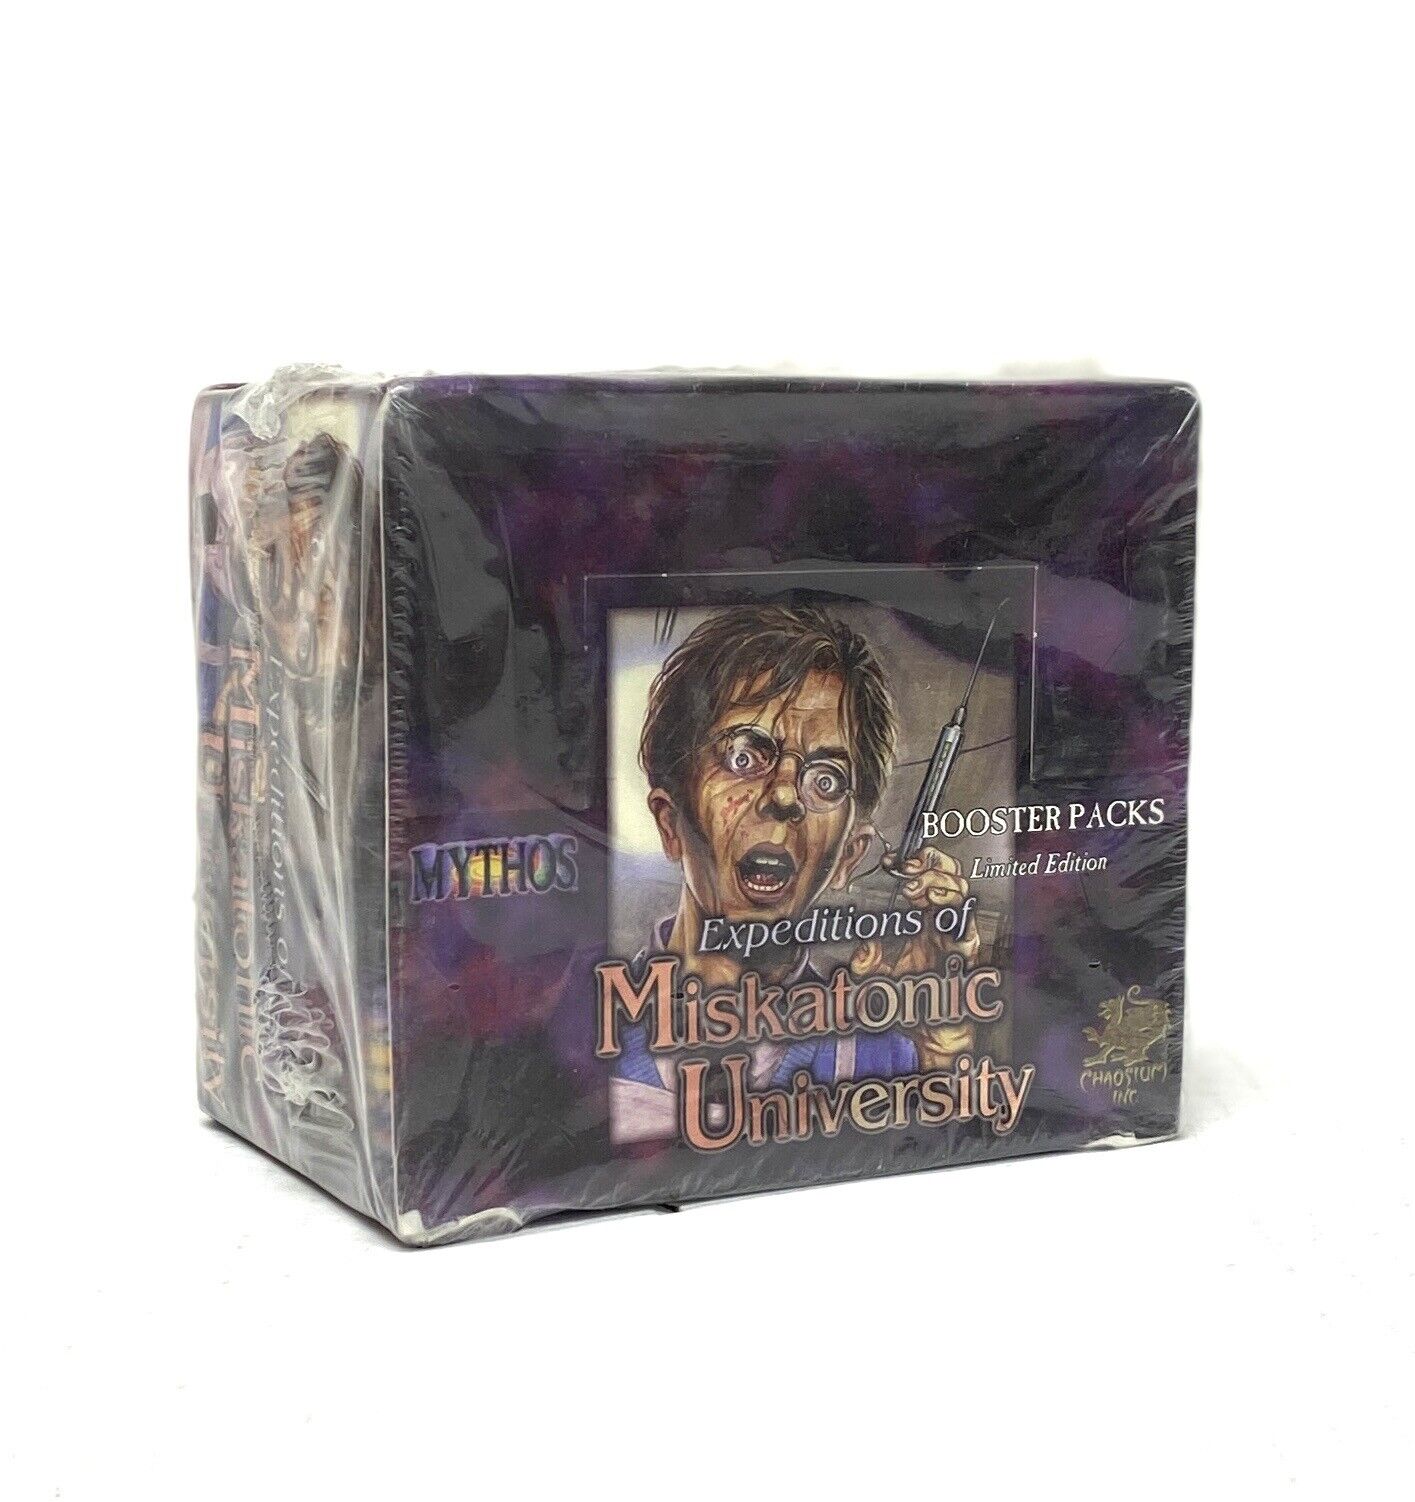 Mythos Expeditions of Miskatonic University Booster Packs Limited Ed. Sealed Box